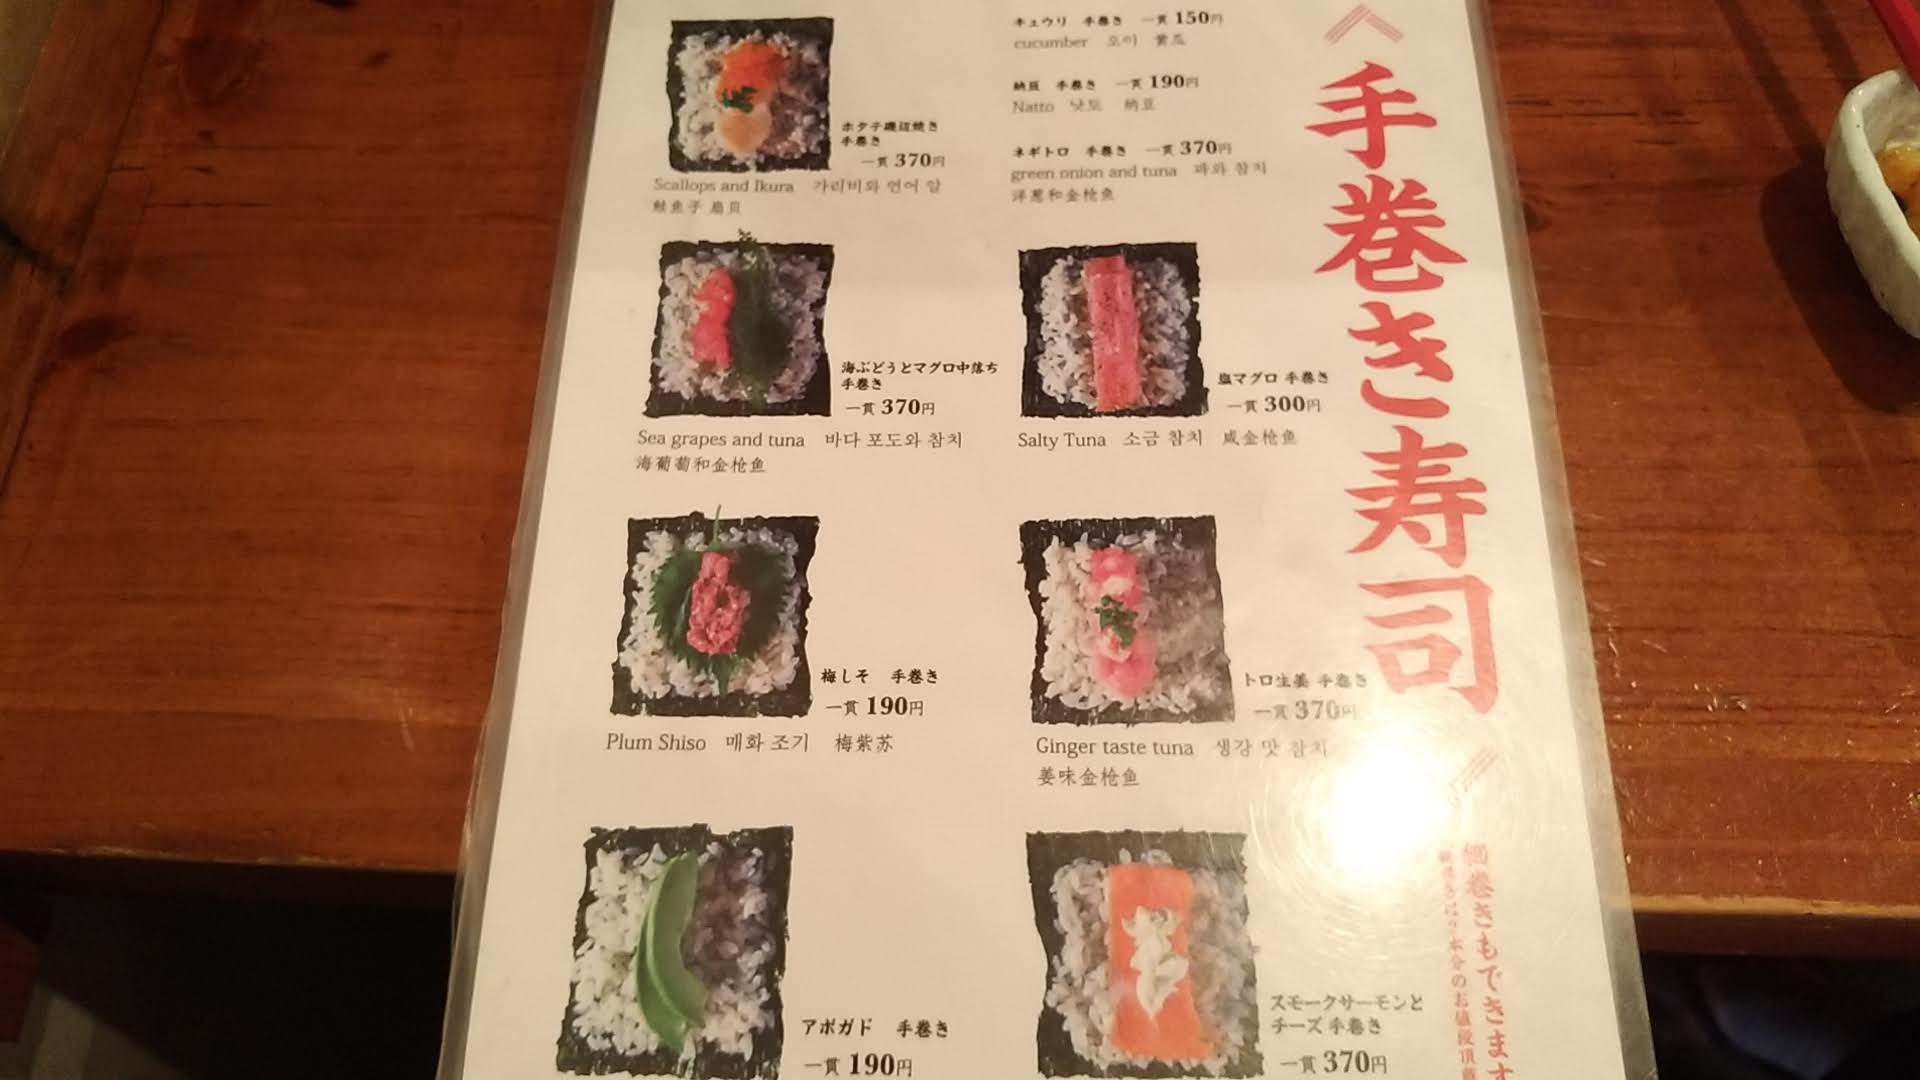 The menu of Sakana sushi 7